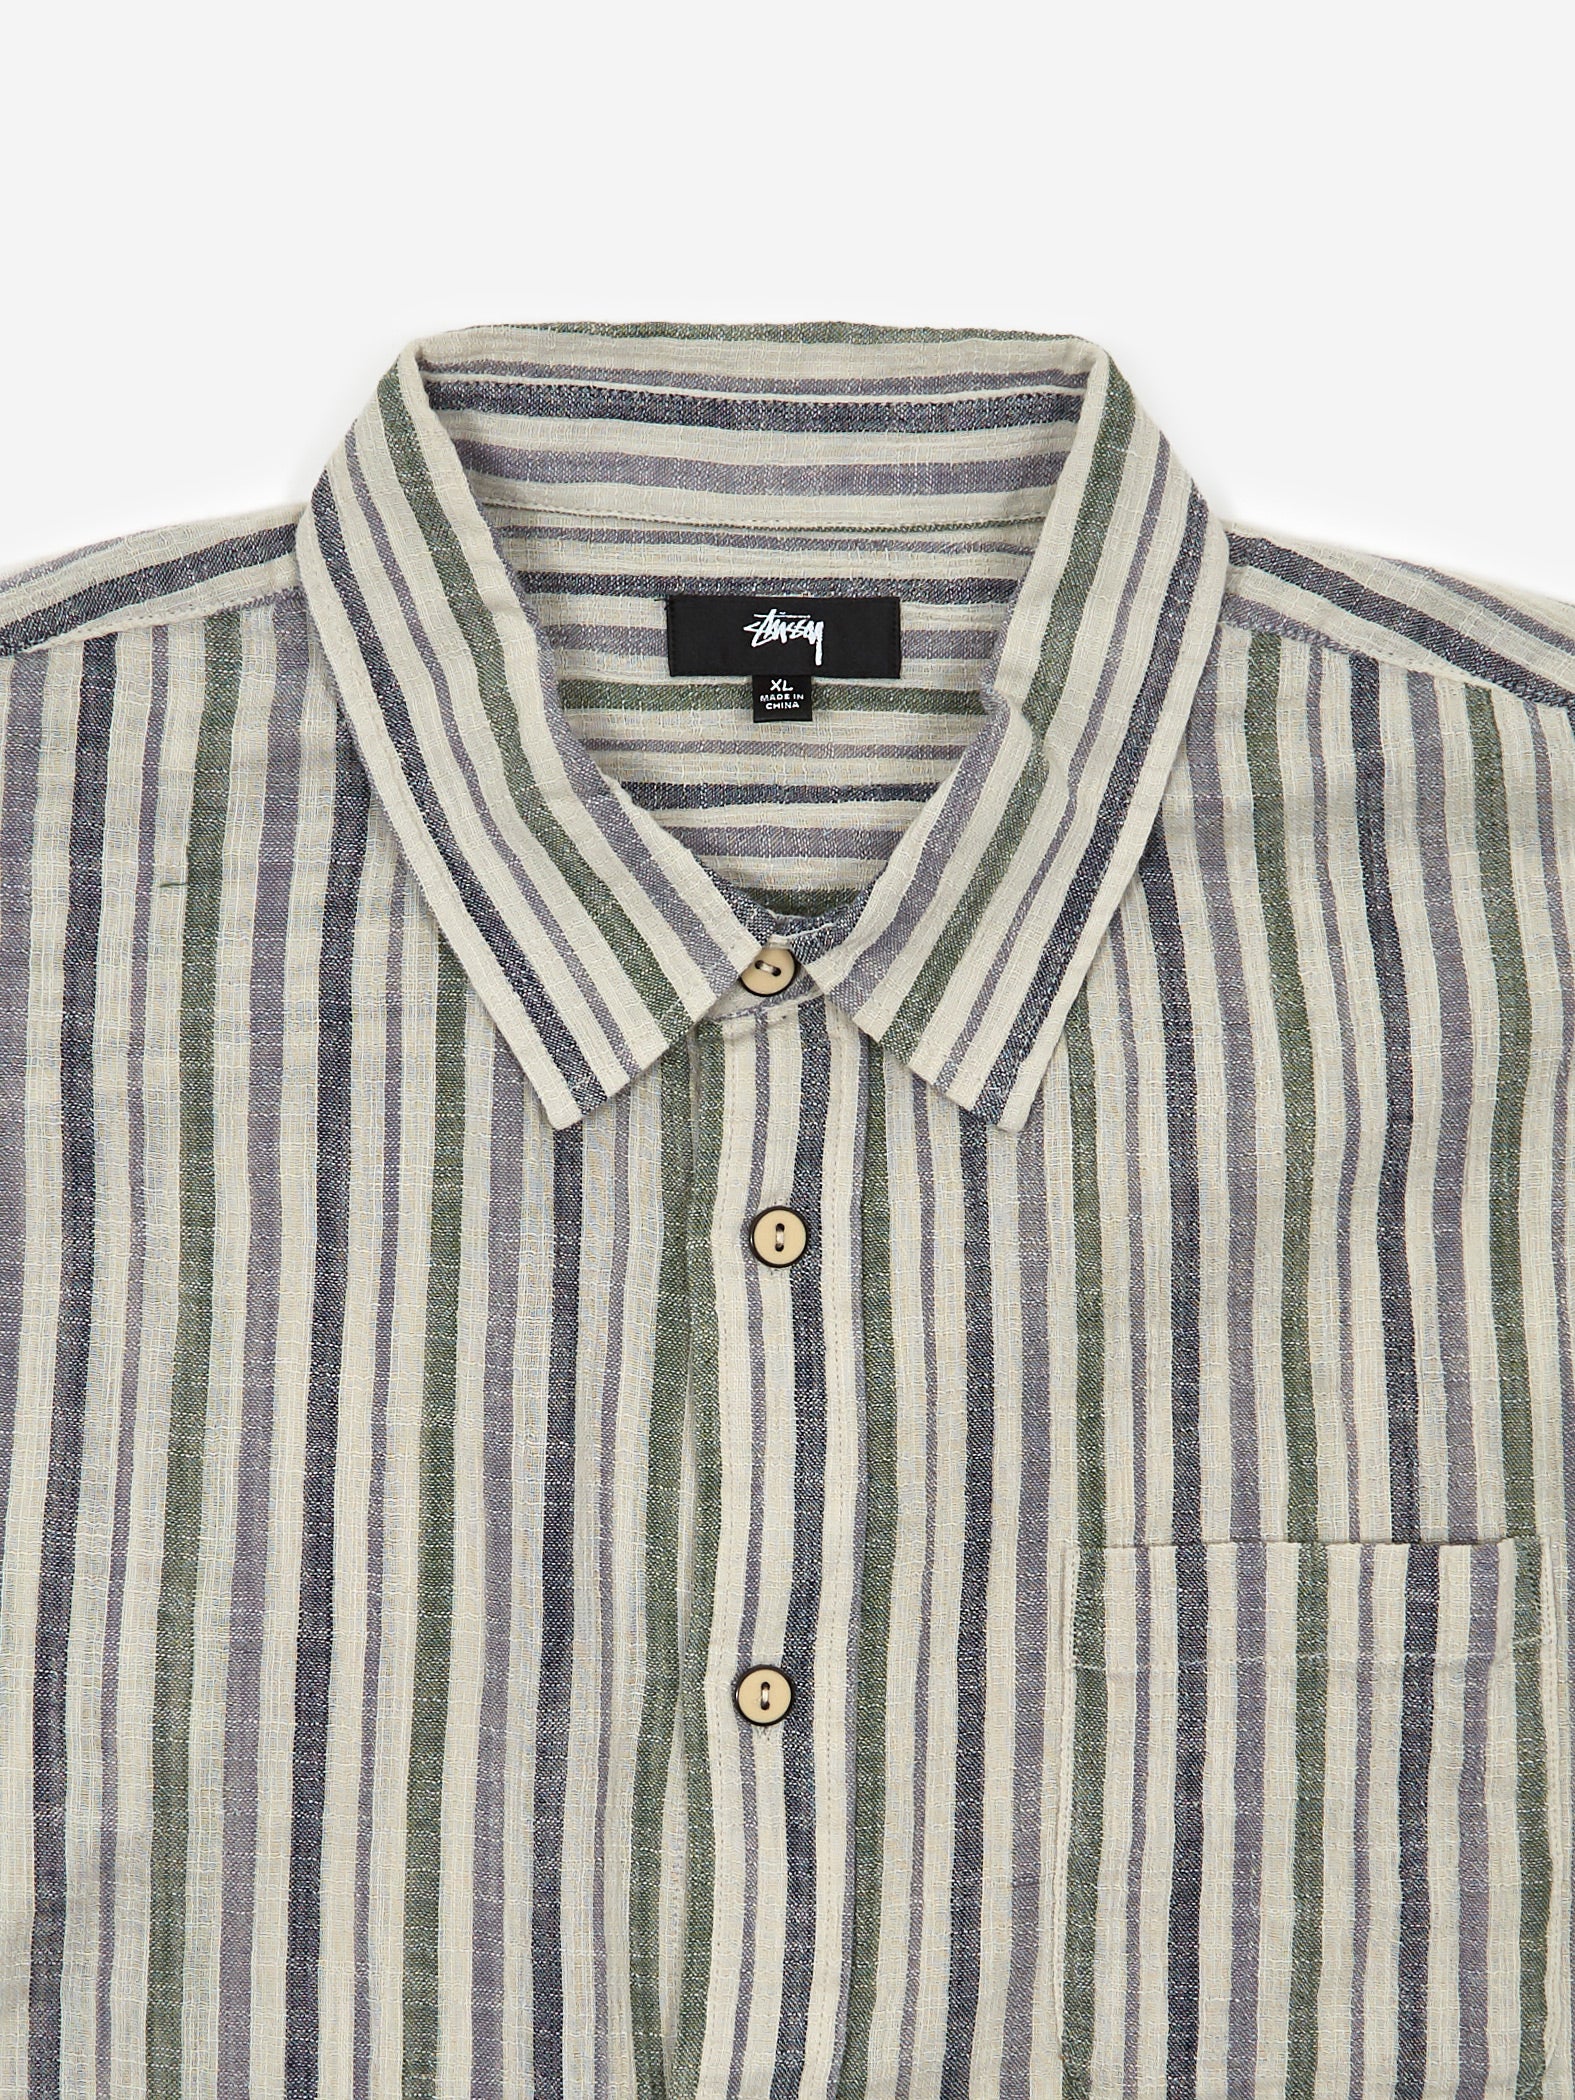 Stussy Wrinkly Cotton Gauze Shirt - Stripe